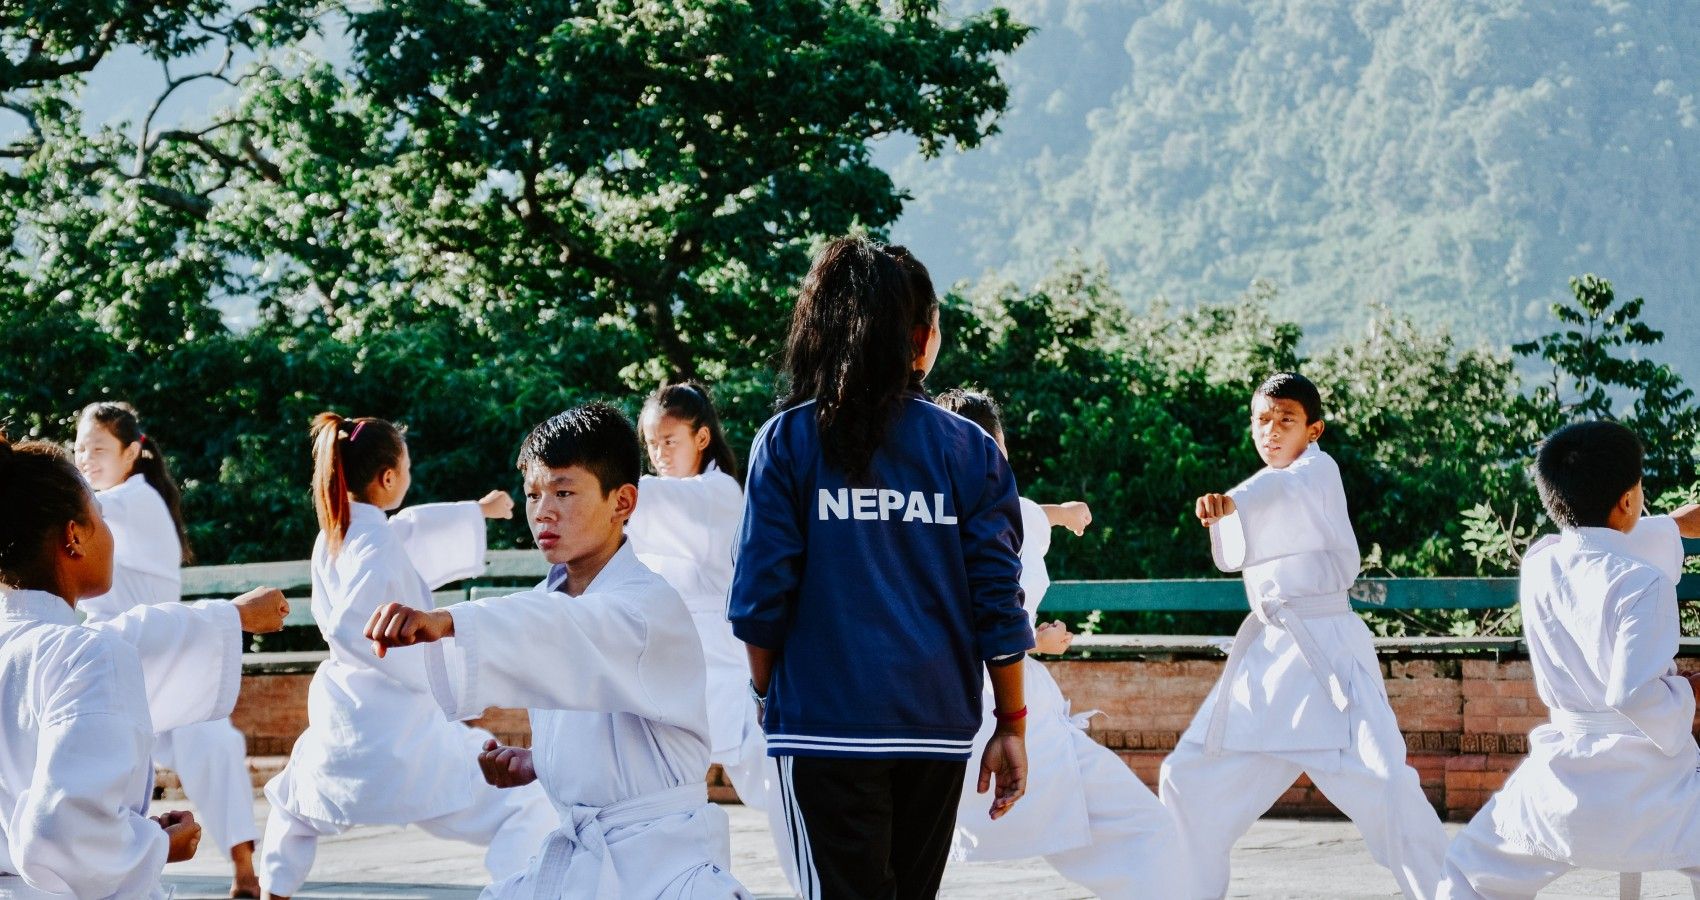 Taekwondo Improves Self-Regulation In Children, Study Finds